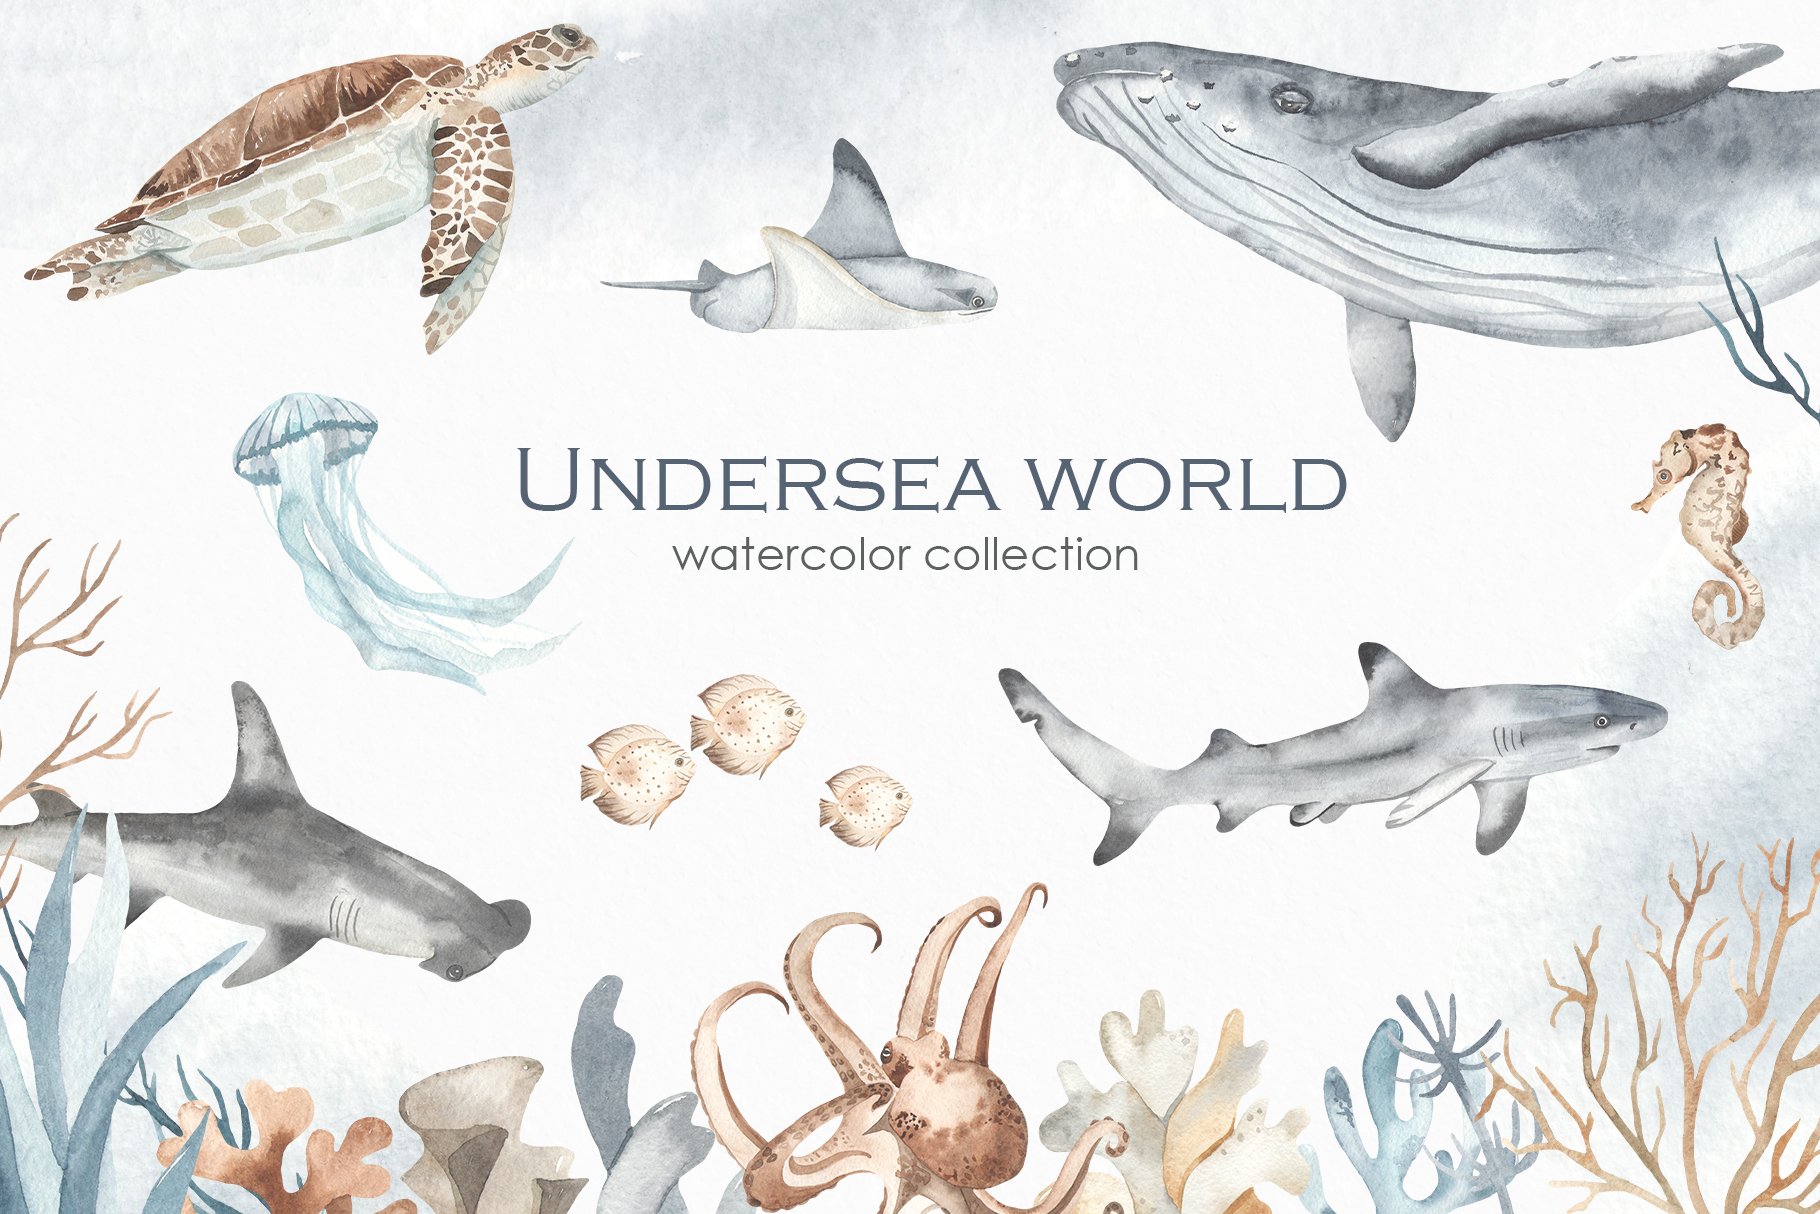 Undersea world Watercolor cover image.